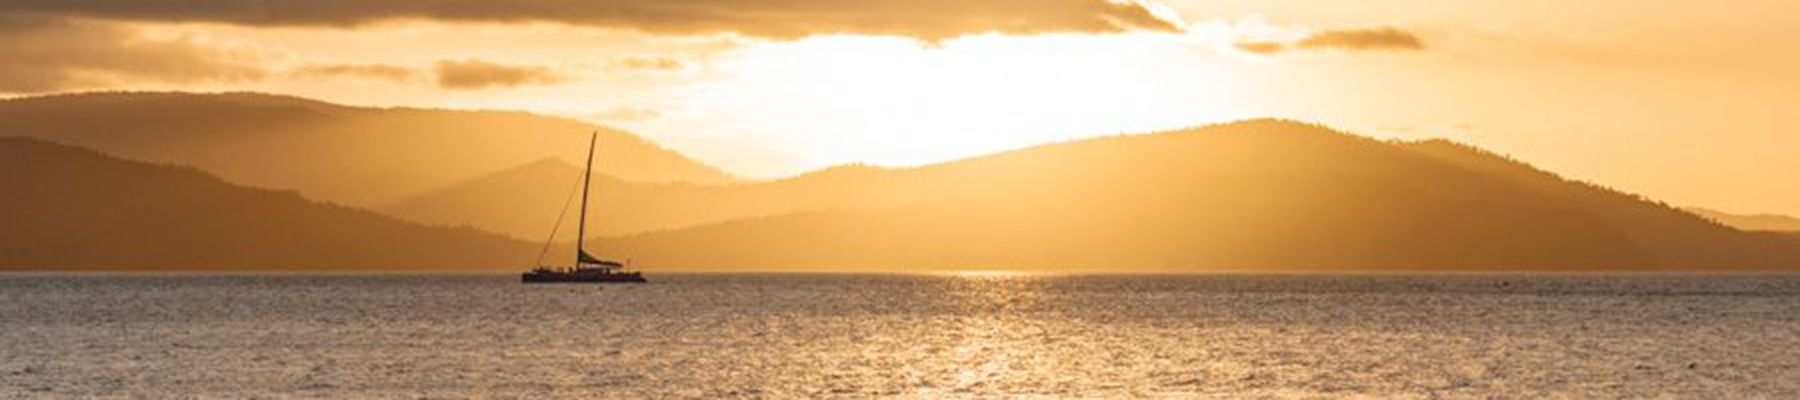 Island sunset whitsundays sailing boat in distance